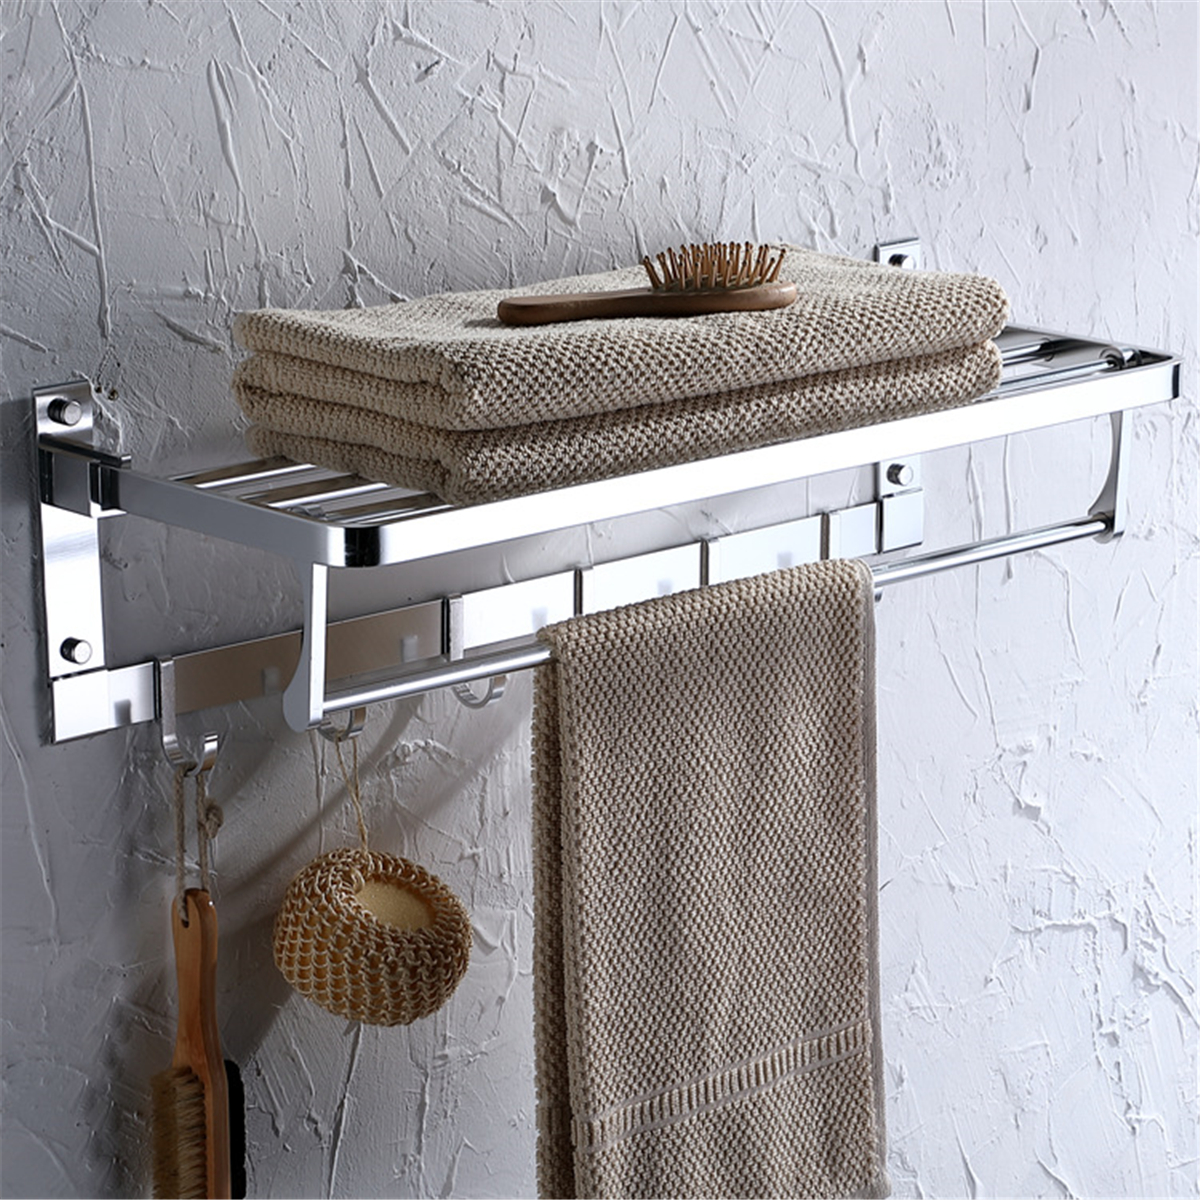 

Alumimum Bath Double-Deck Towel Rack Rail Bar Wall Mounted Holder Storage Shelf